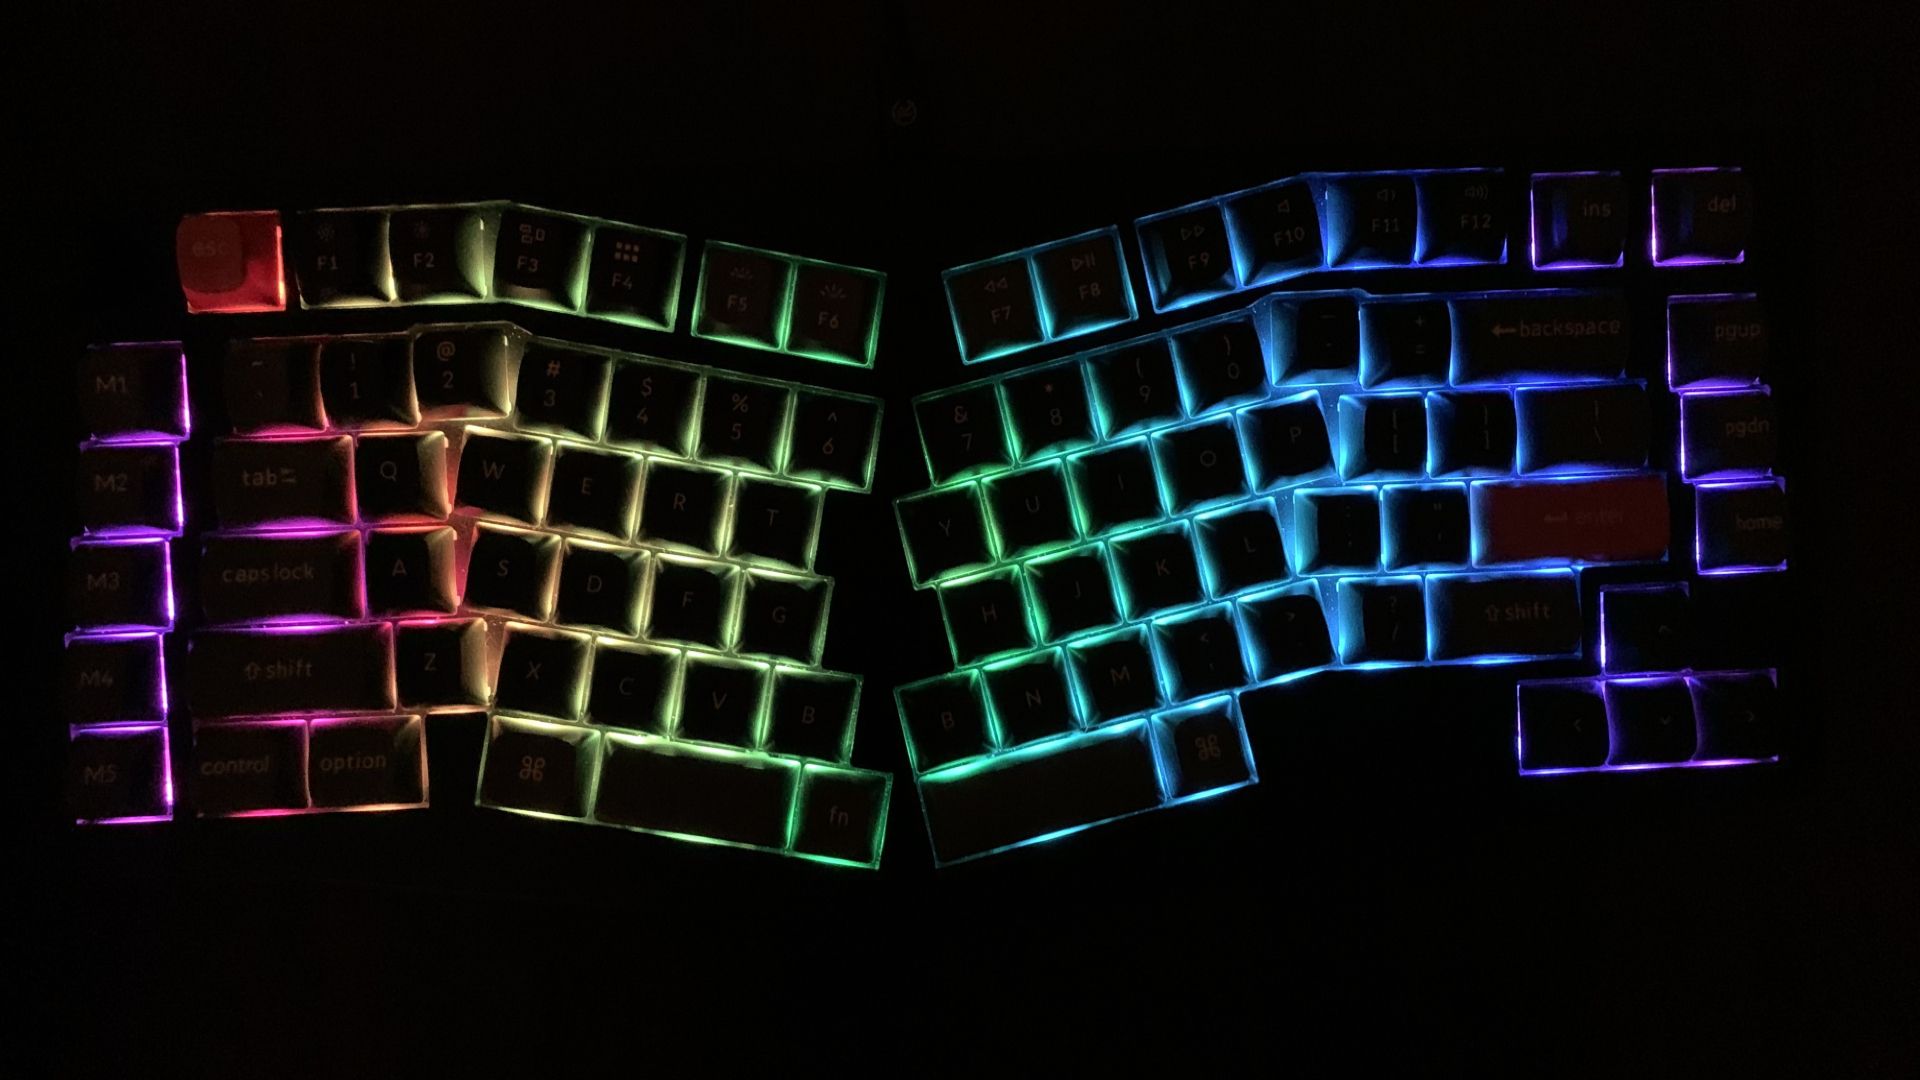 Keychron RGB backlighting in dark room